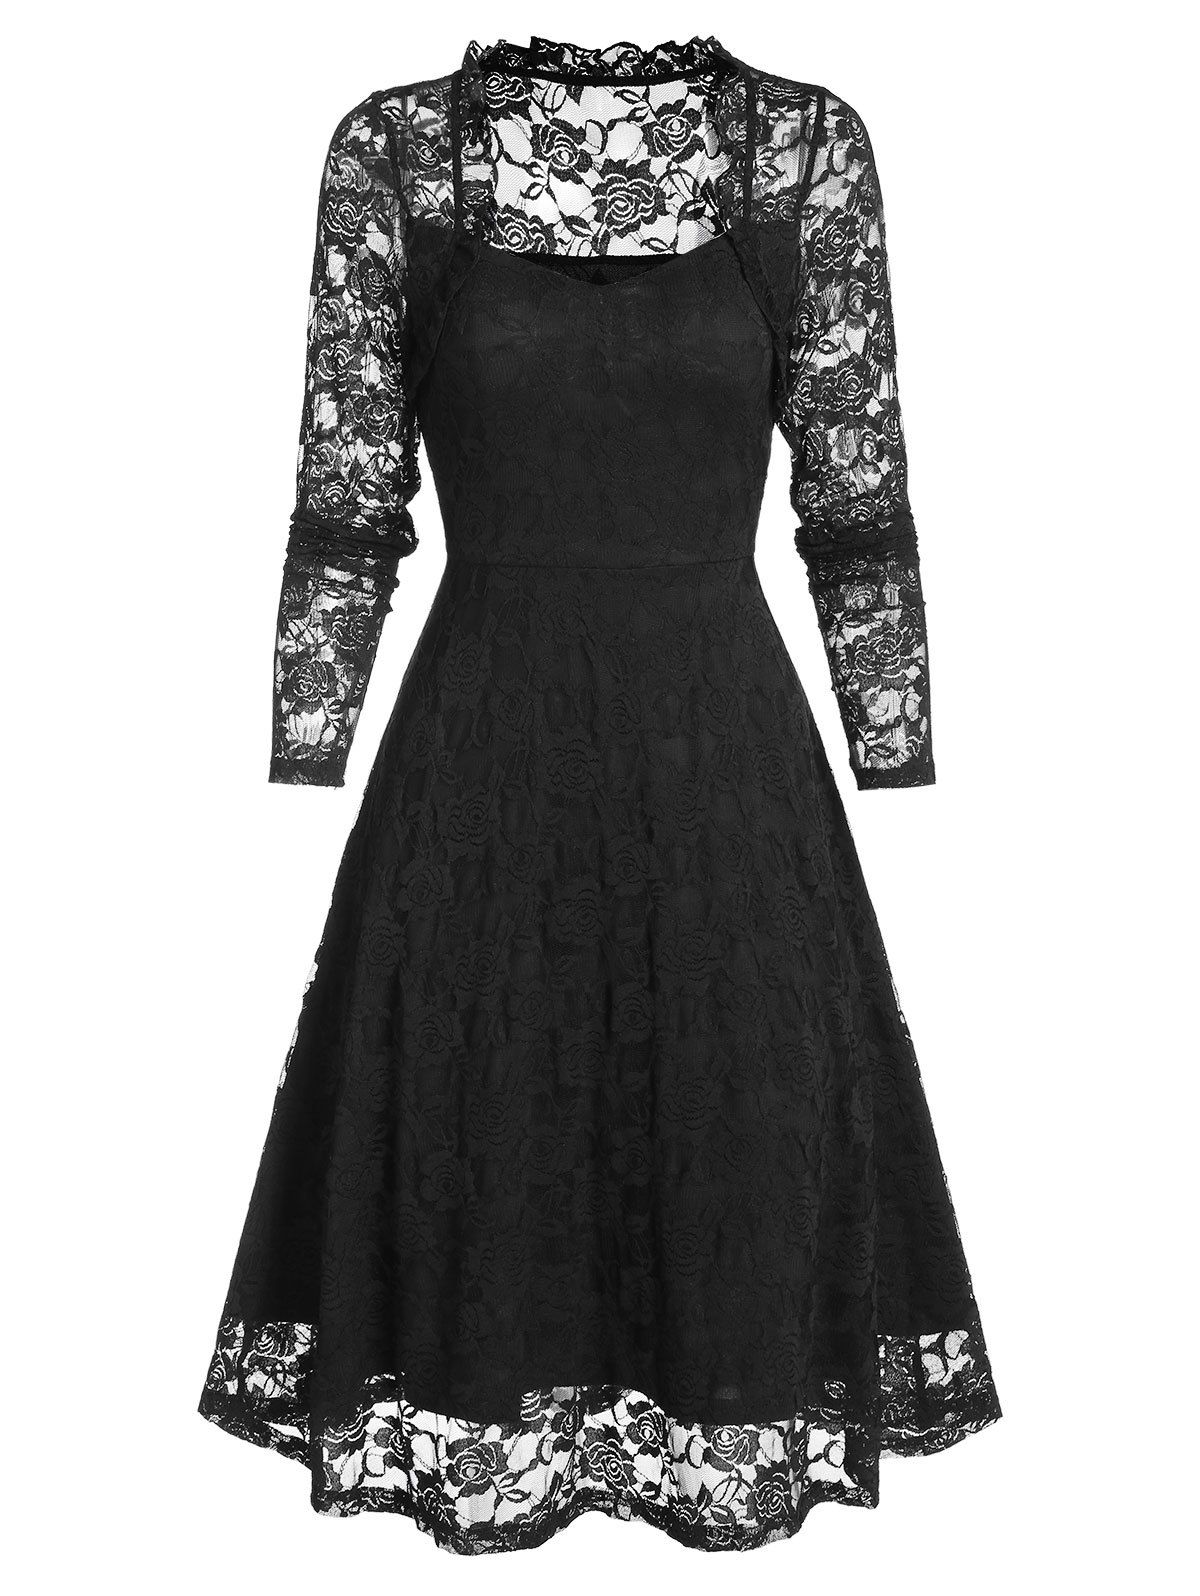 Ruffle Queen Anne Collar Lace Dress [47% OFF] | Rosegal